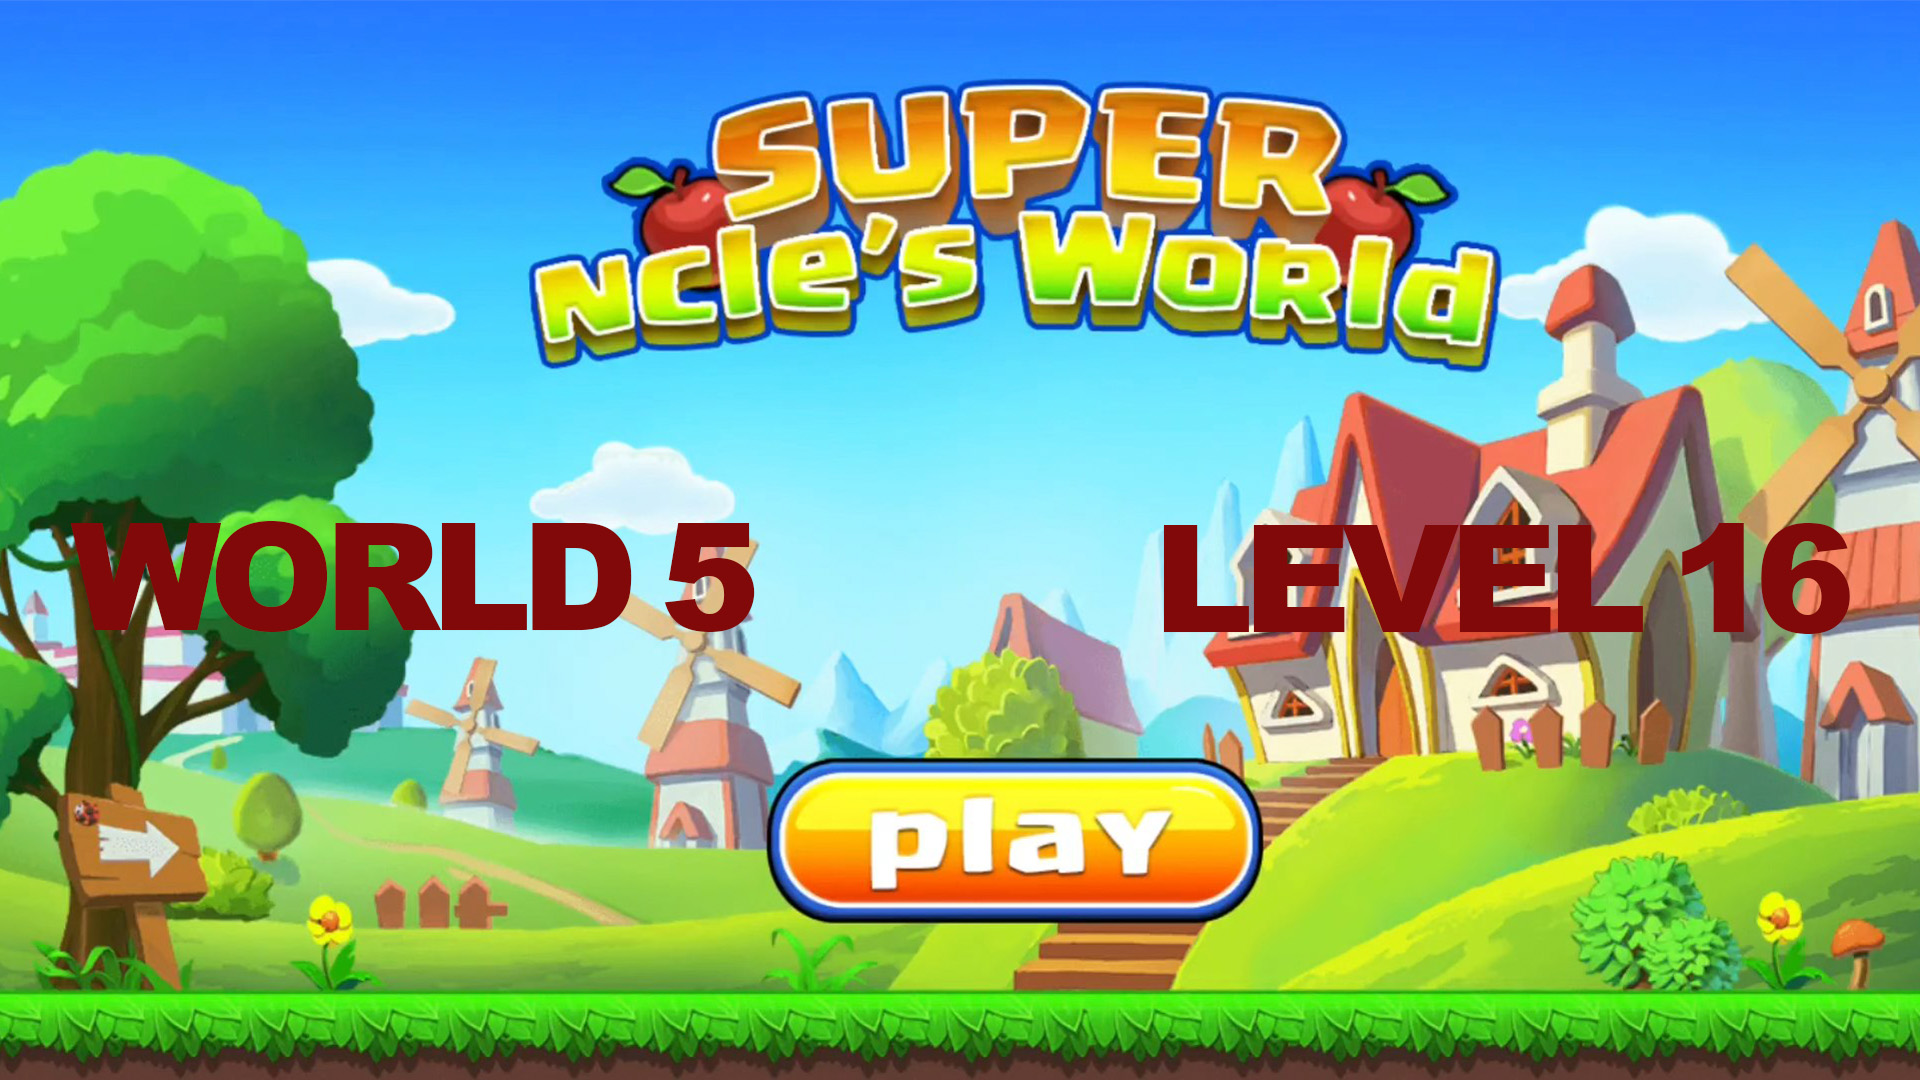 Super ncle's  World 5. Level 16.